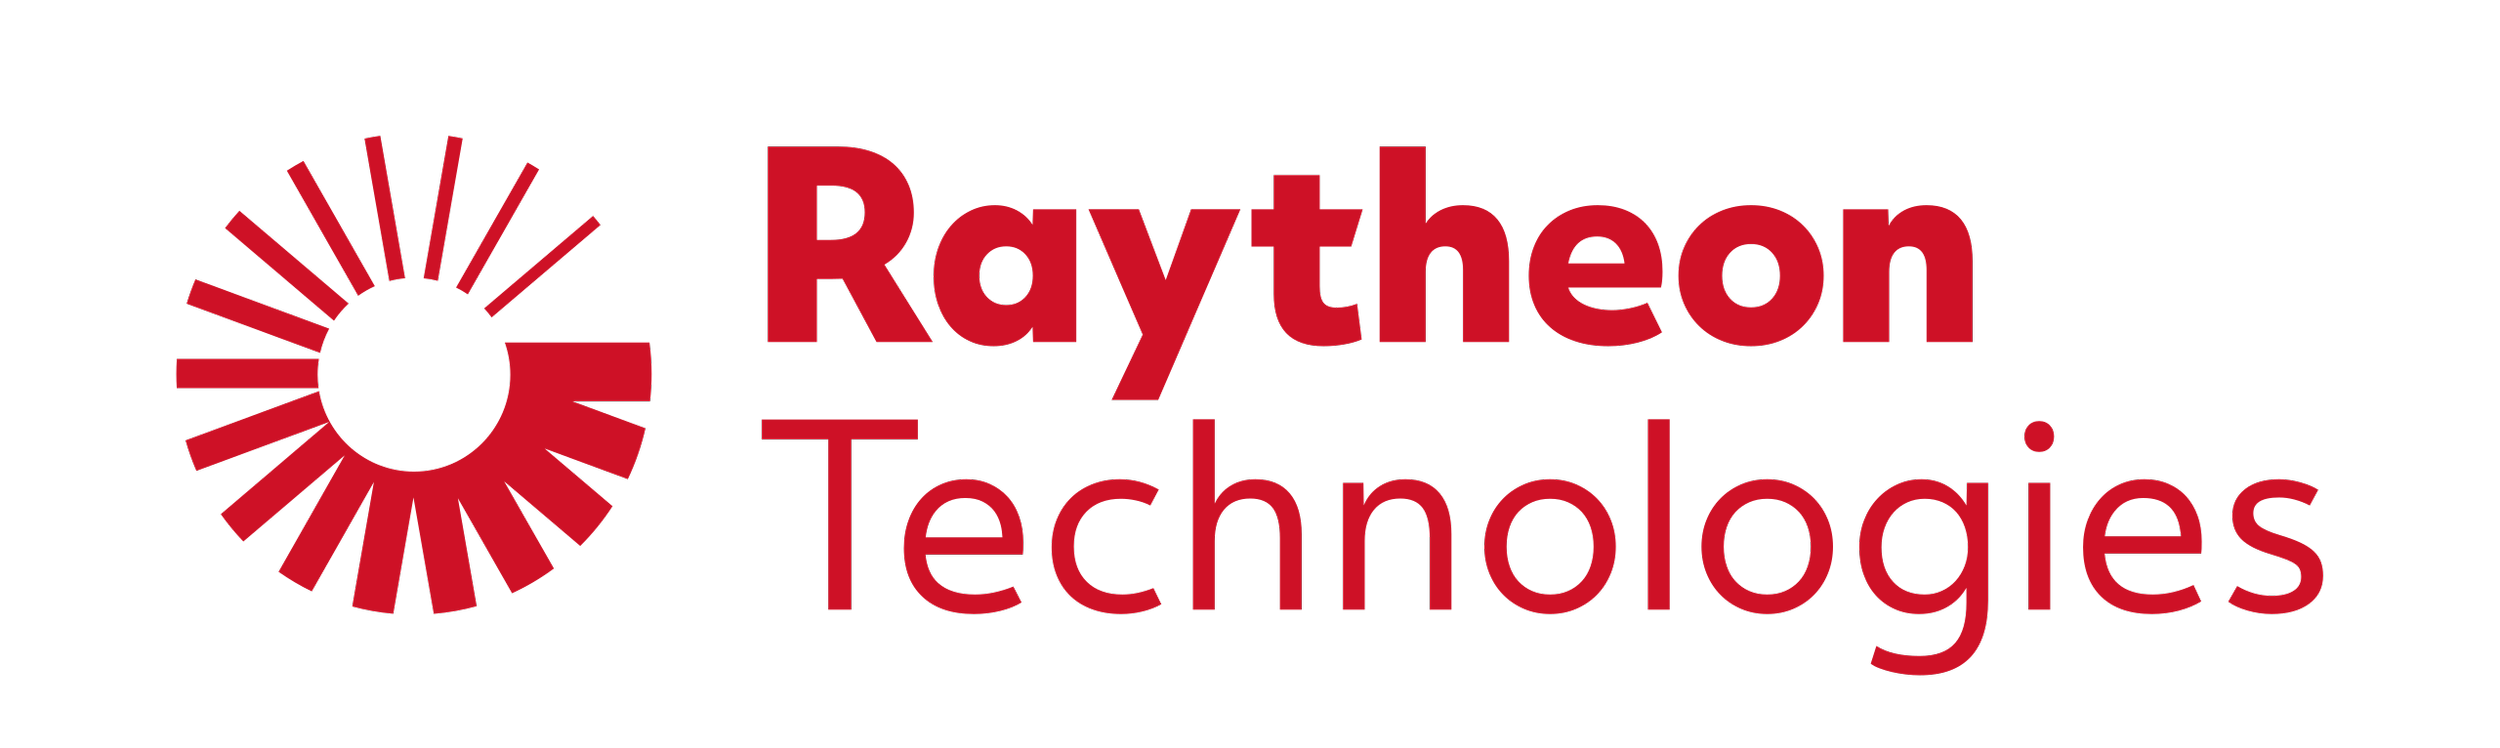 Raytheon_Technologies_logo.svg.png